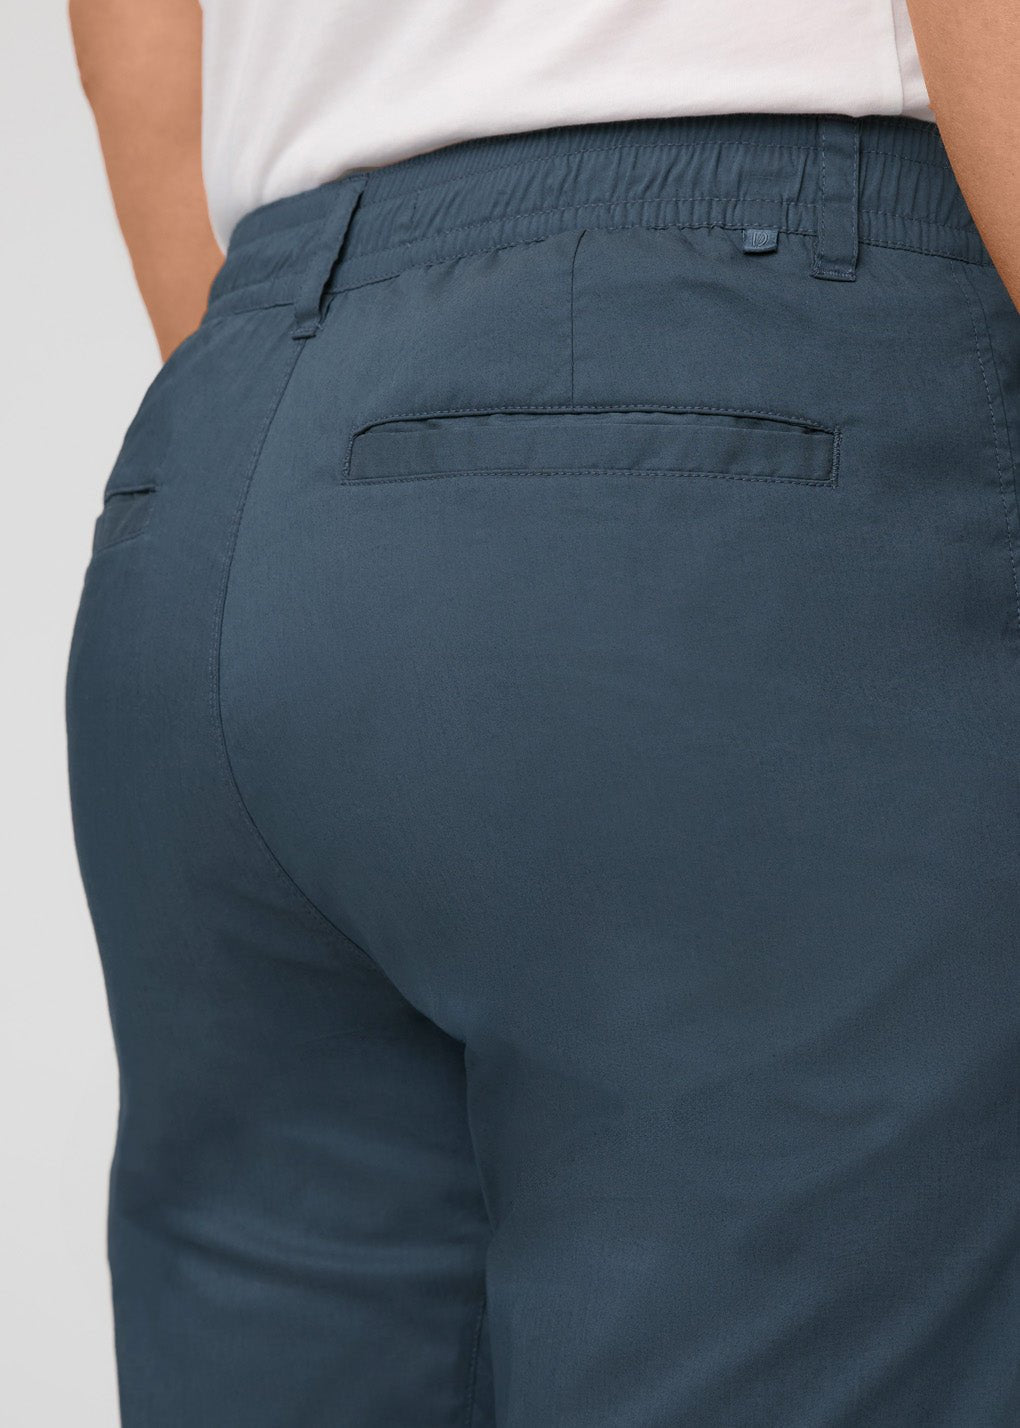 mens sail lightweight summer travel pants back waistband and pocket detail